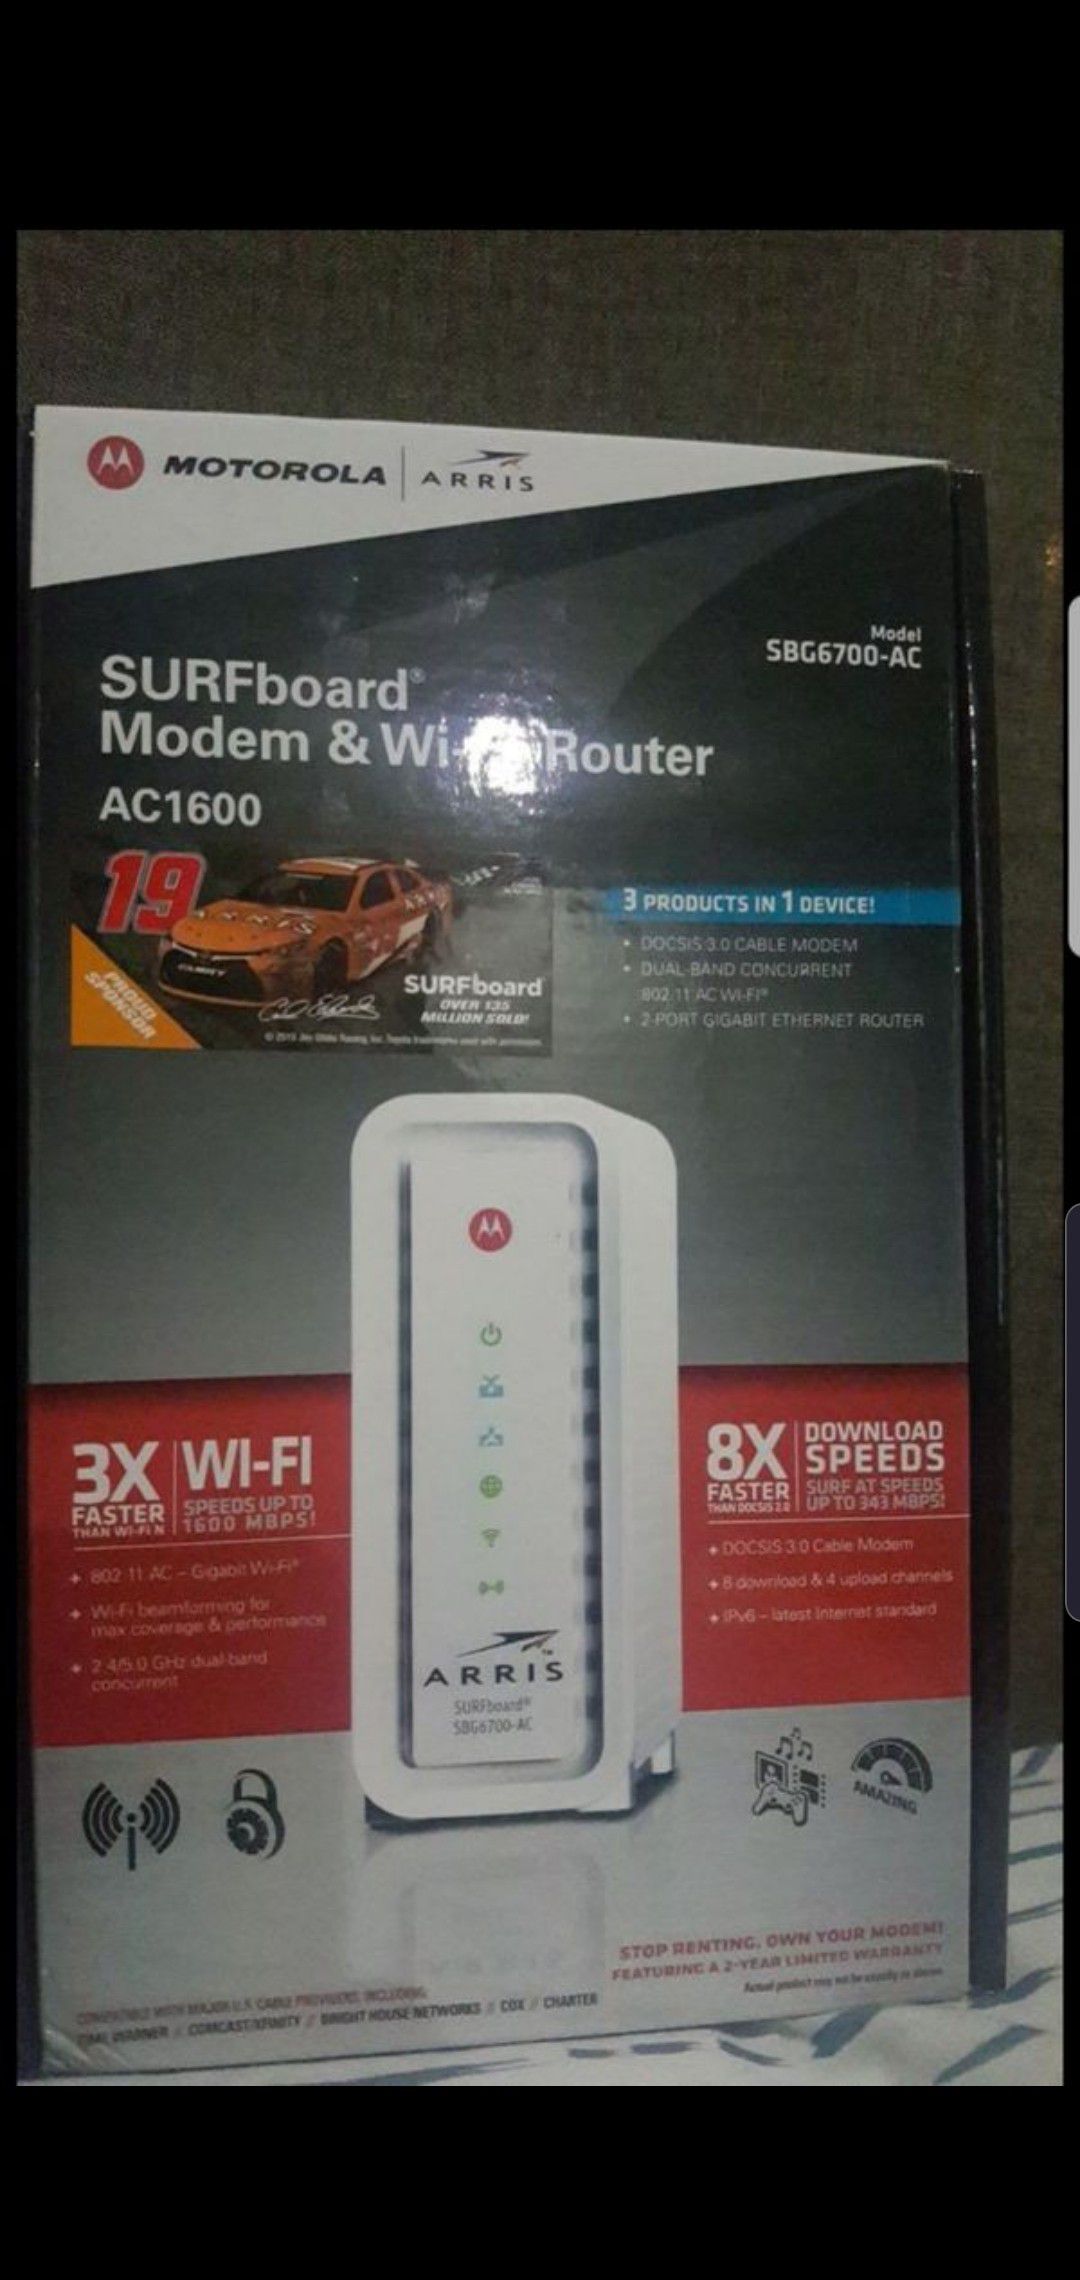 Surfboard modem & Wi-Fi router AC1600